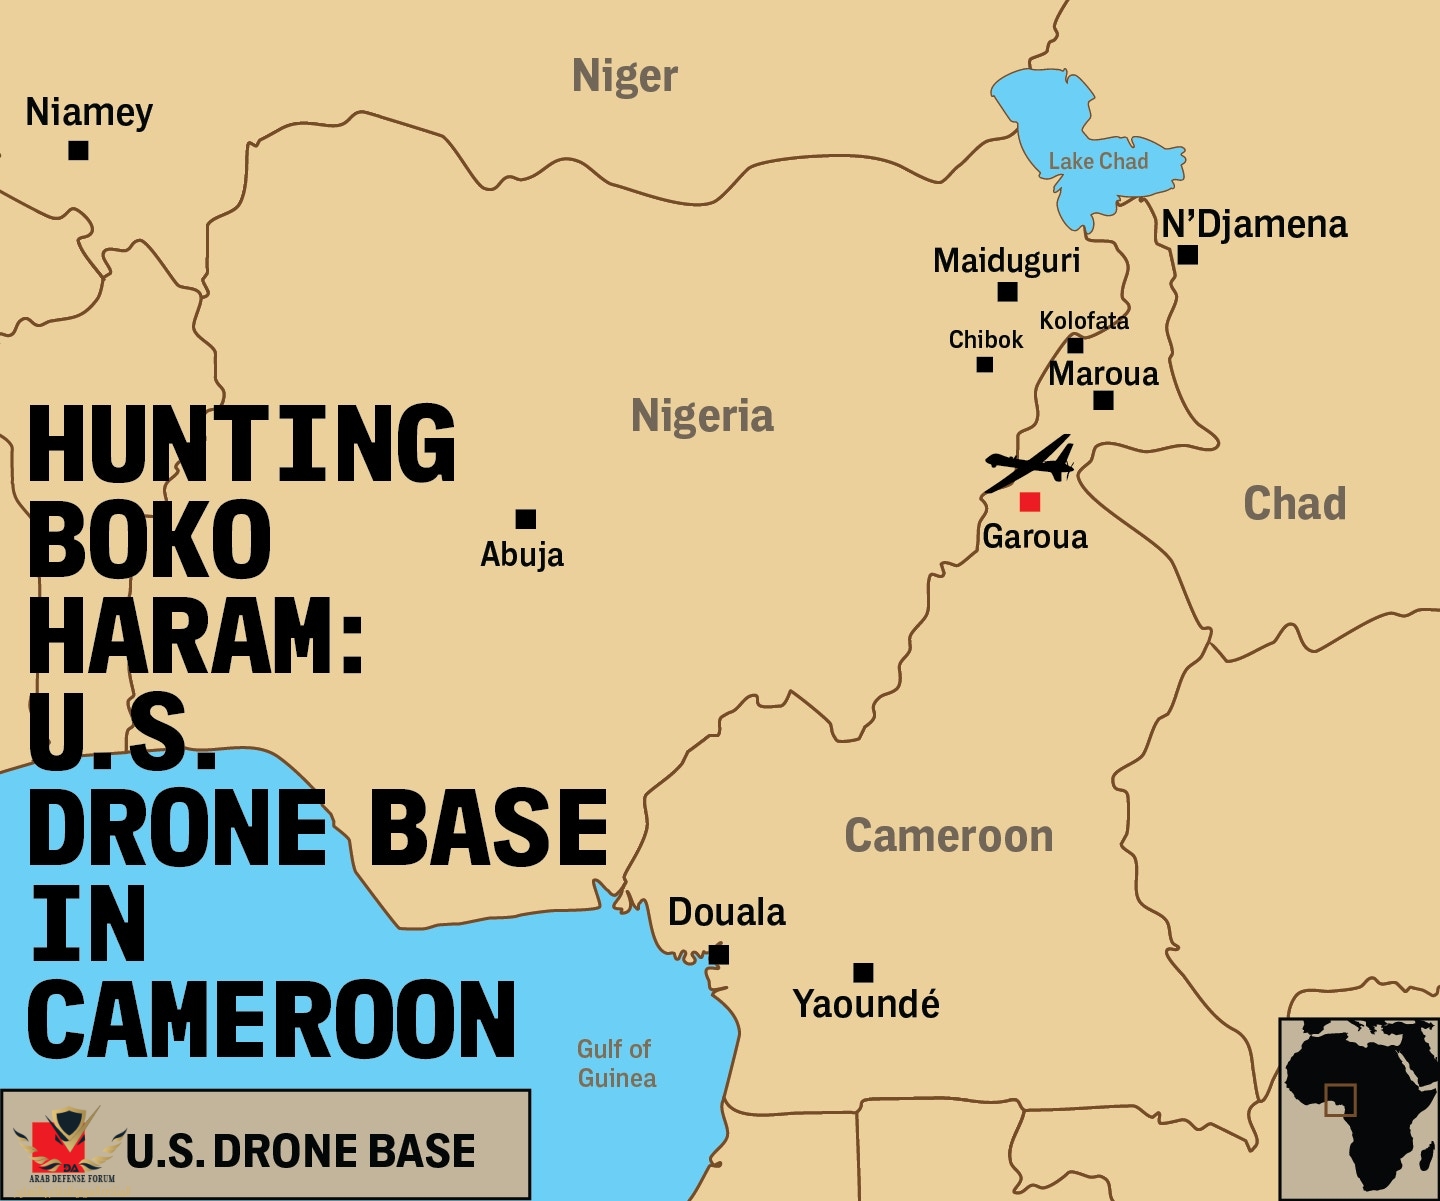 theintercept_drone_base_cameroon1.jpg